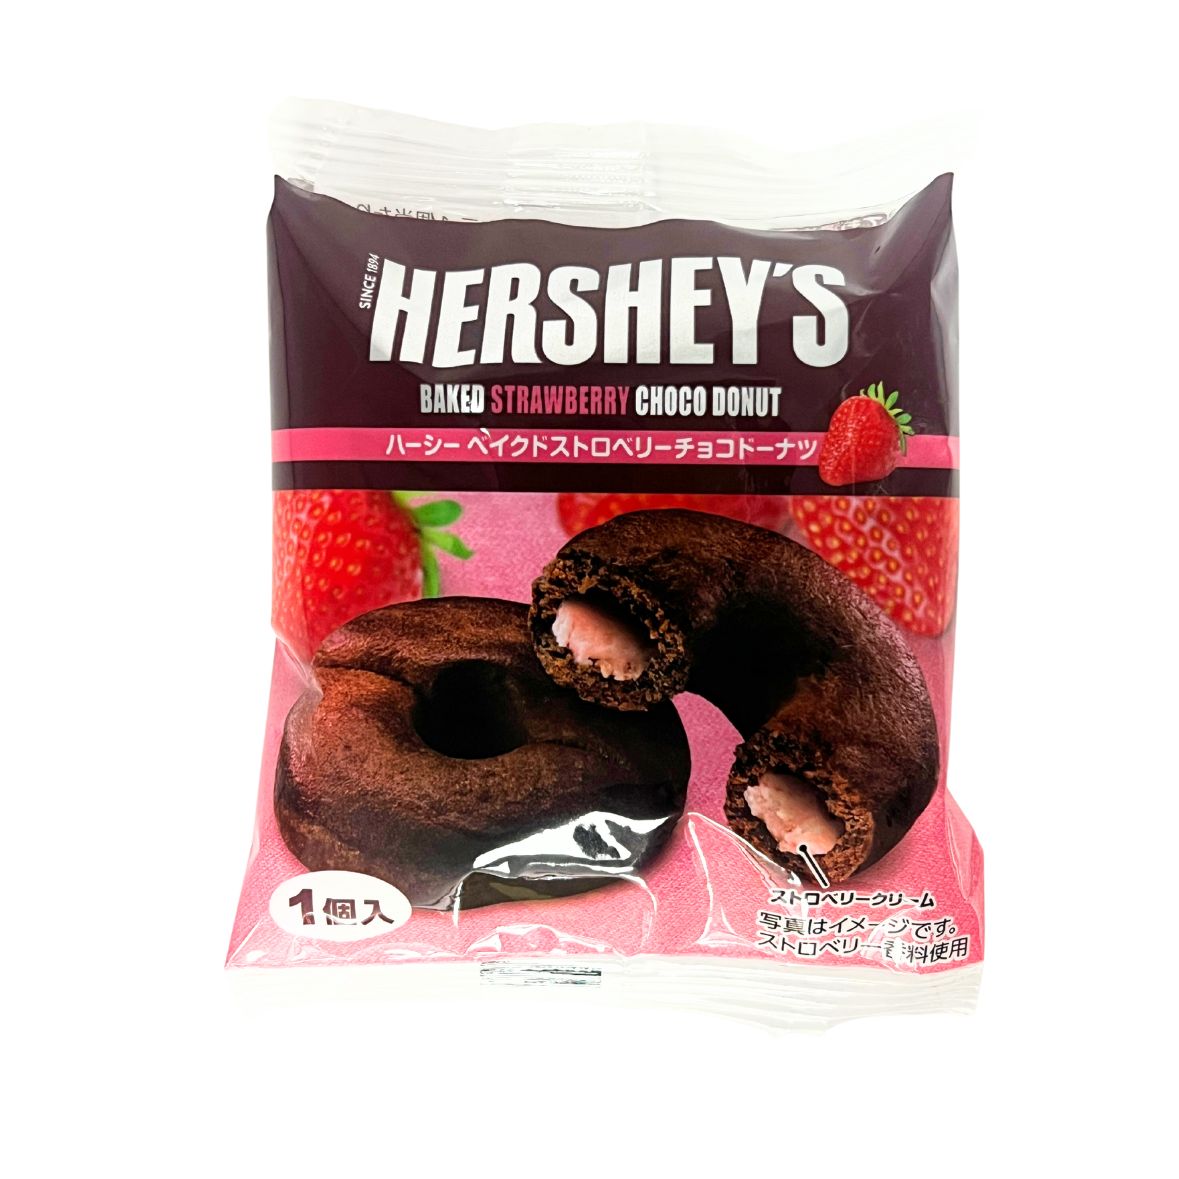 Hersheys - Strawberry Chocolate Donut (Japan)